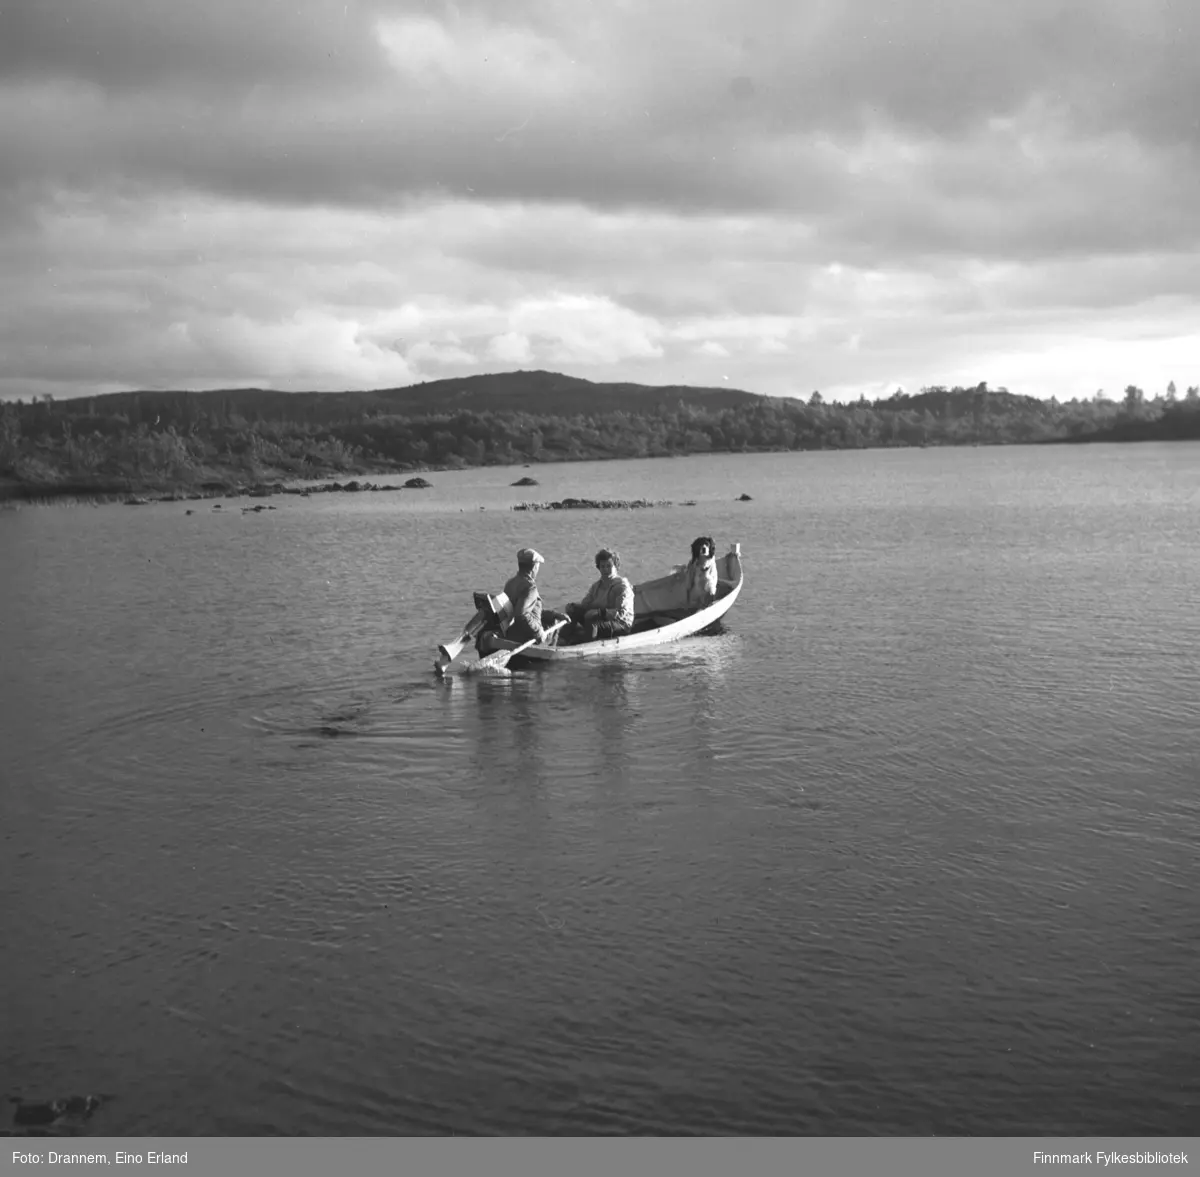 Uuno Lappalainen, Turid Karikoski og hunden Rexi i båt på en innsjø.